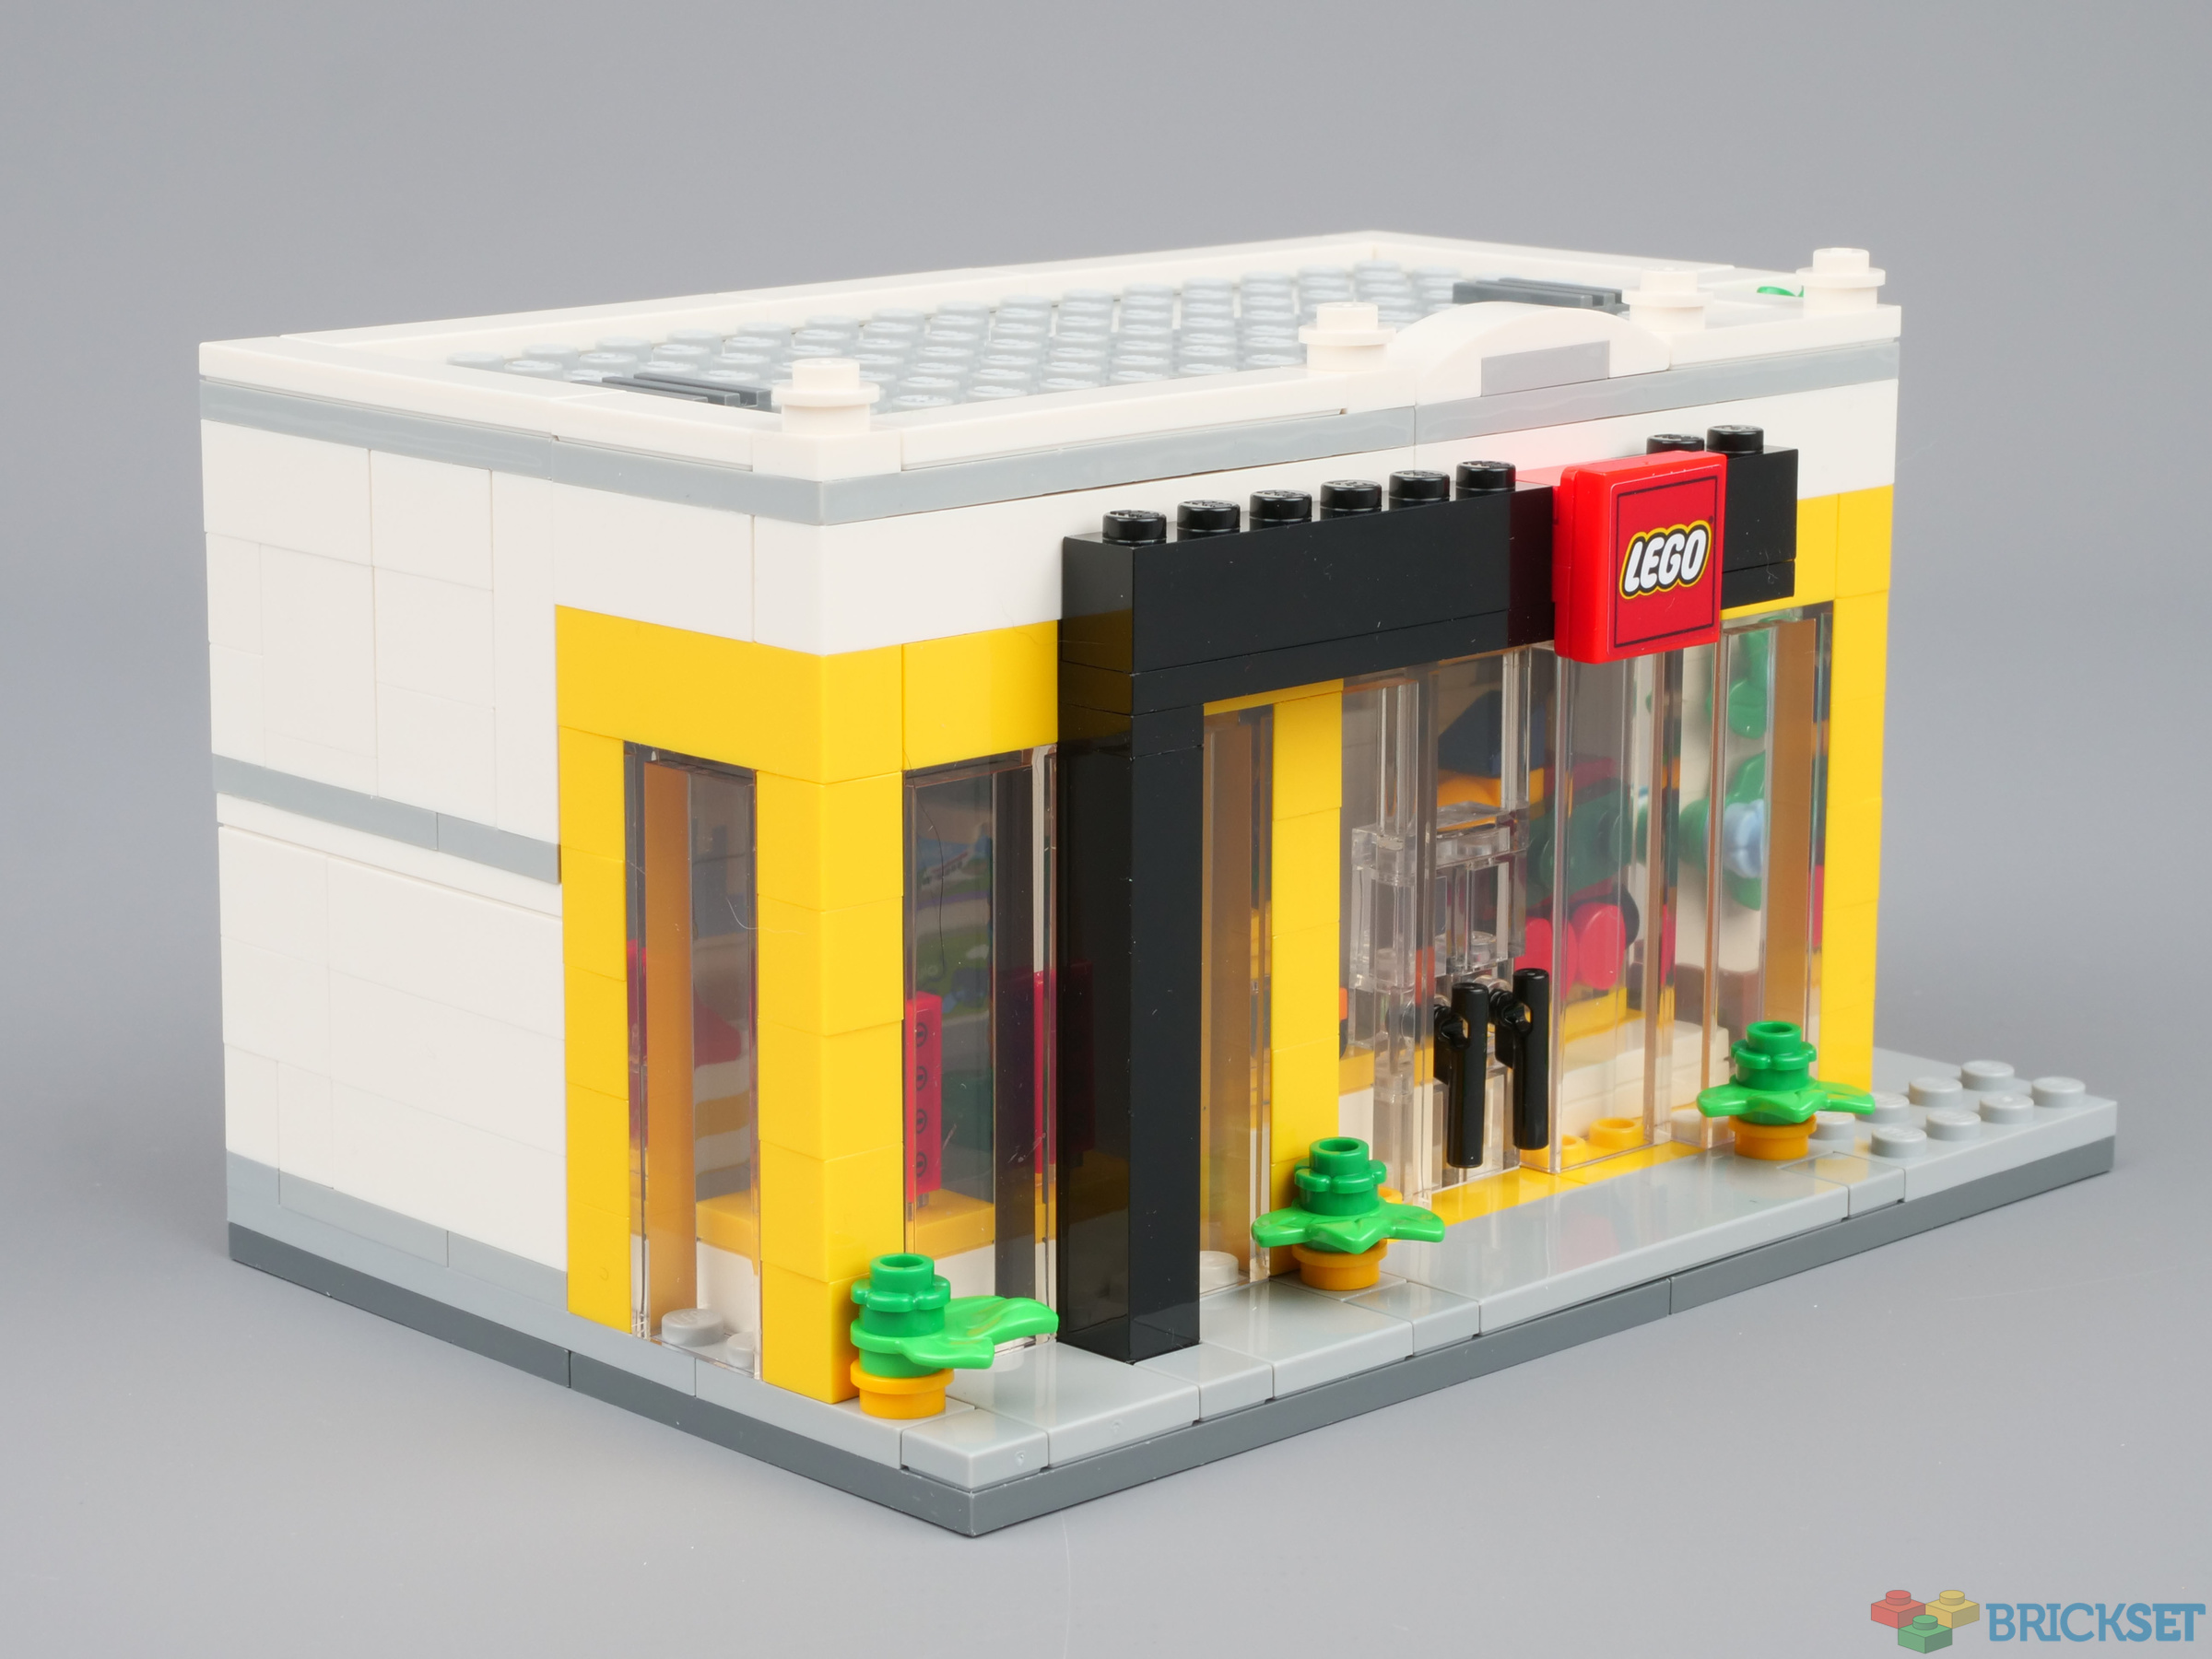 LEGO 40528 LEGO Brand Store review |